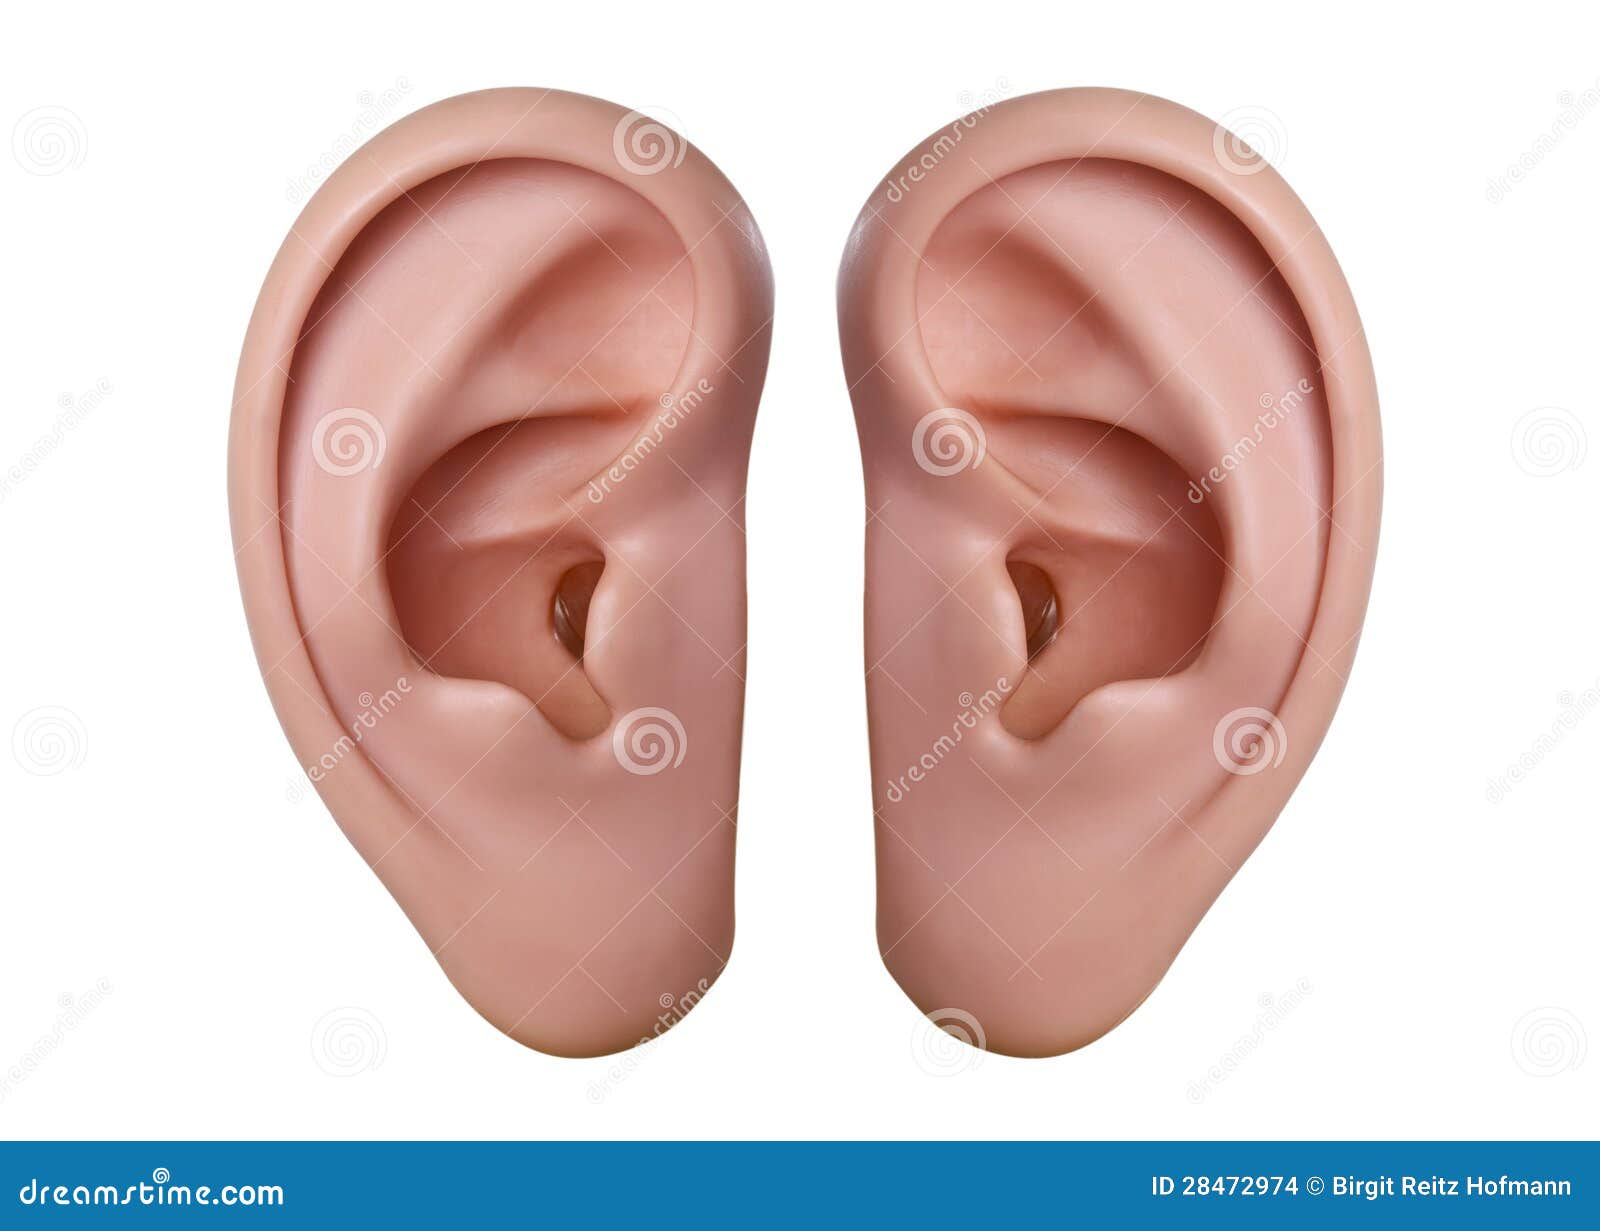 Human ears stock photo. Image of auris, auricula, human - 28472974